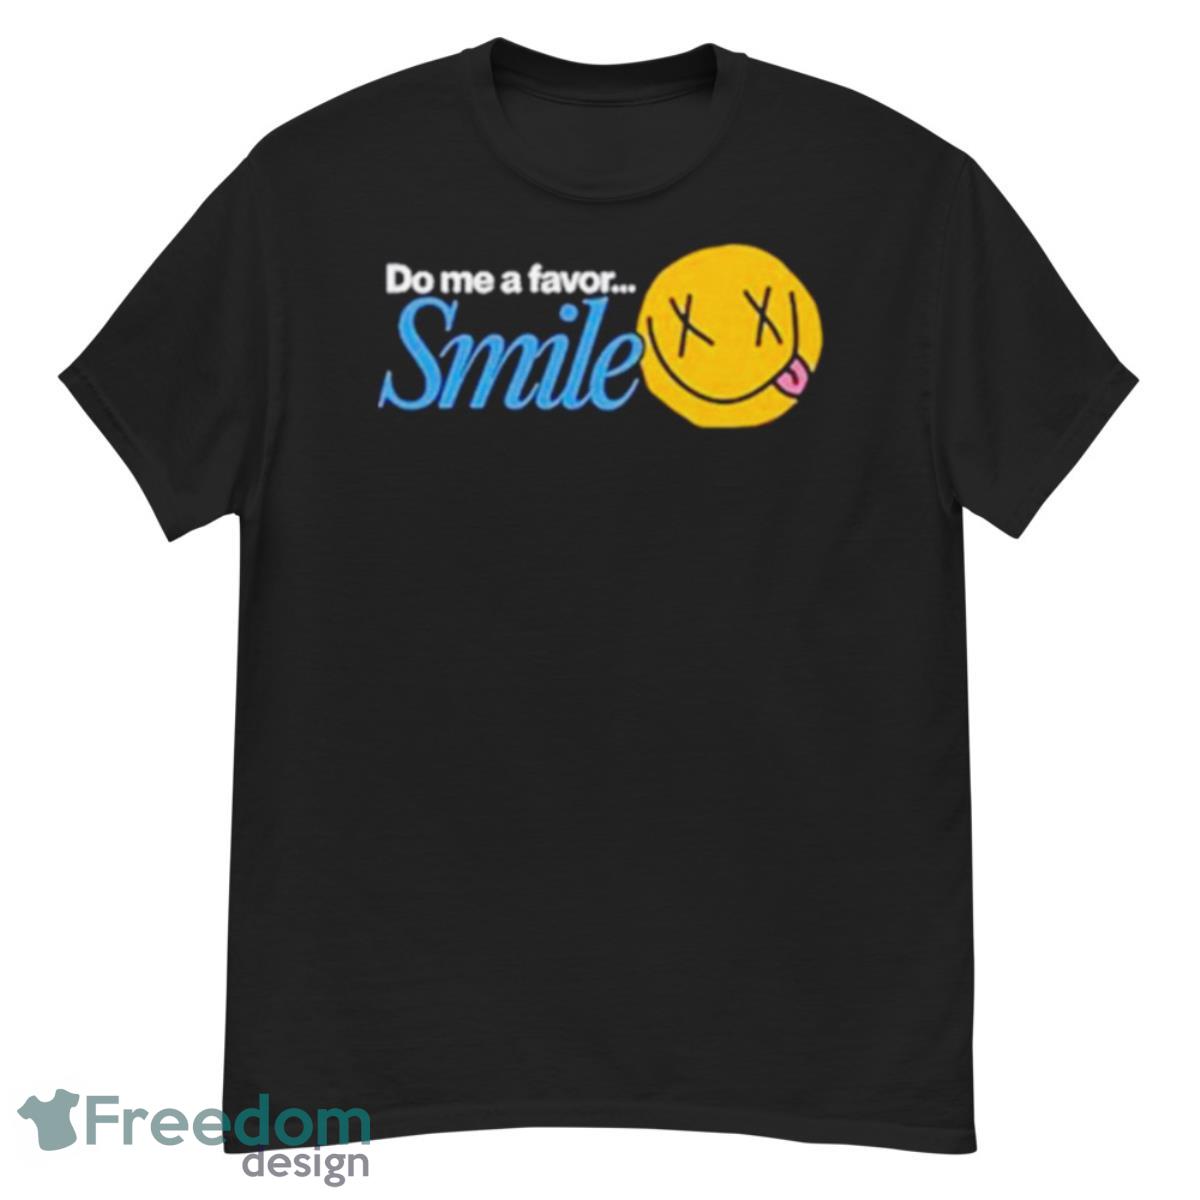 Do Me A Favor Smile Black shirt - G500 Men’s Classic T-Shirt